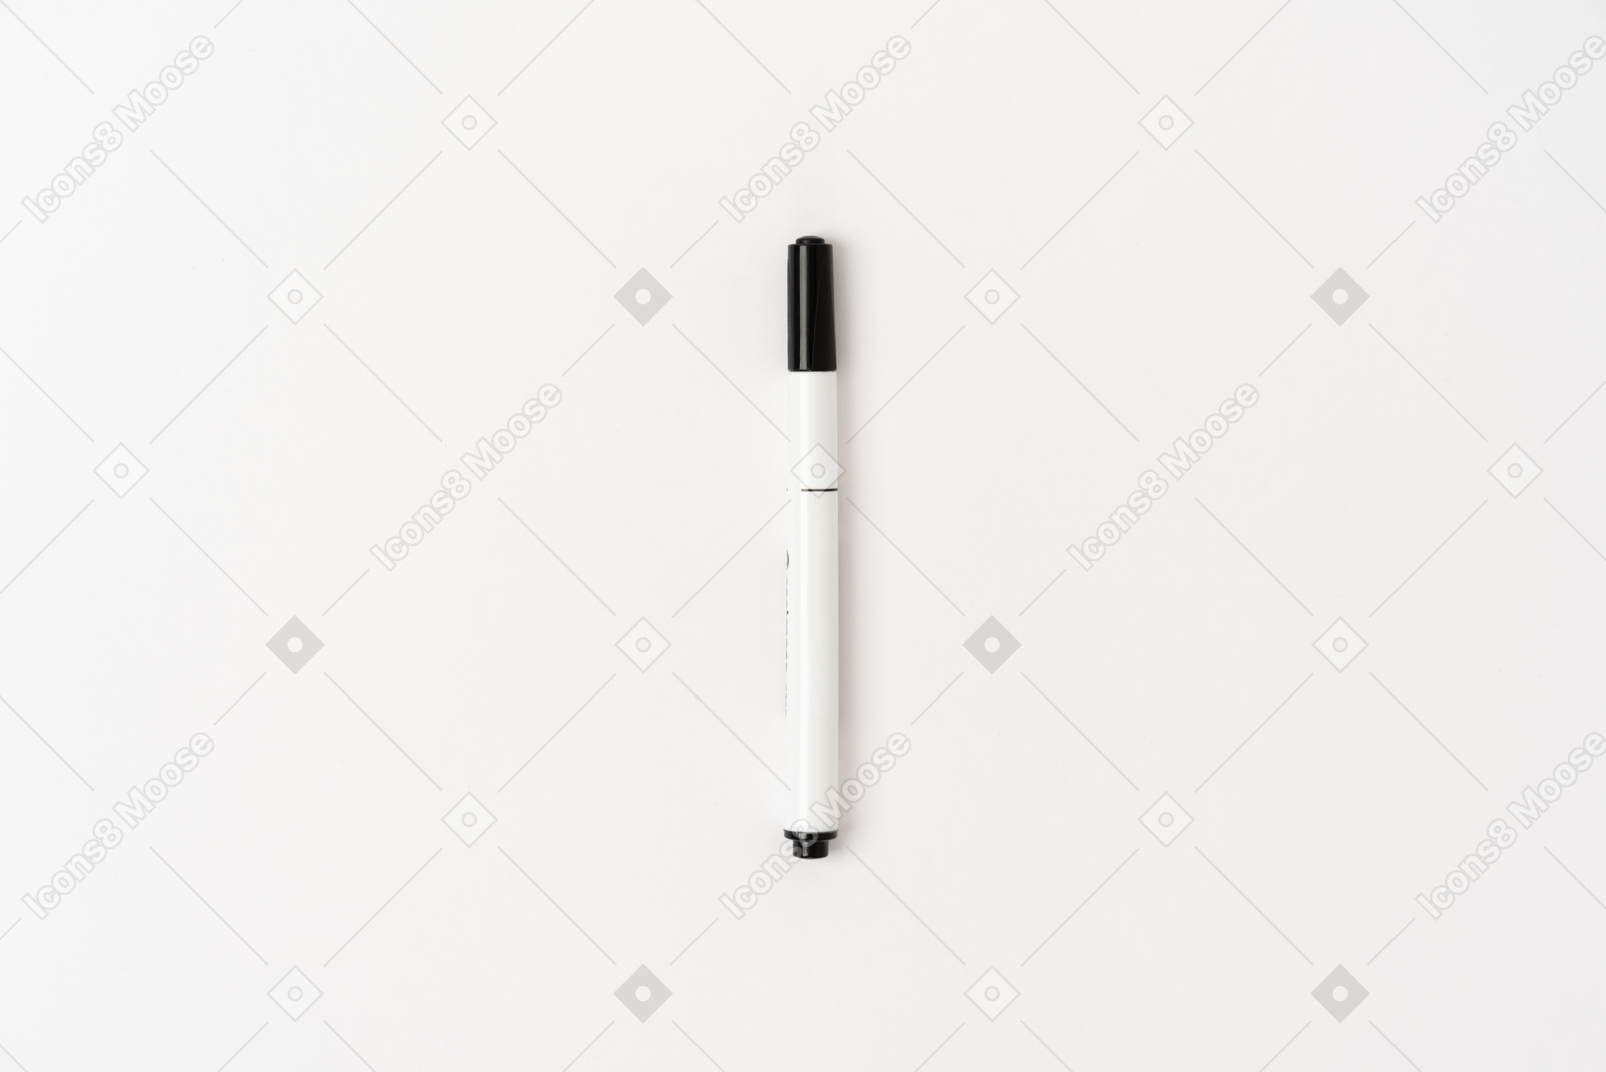 Penna bianca e nera